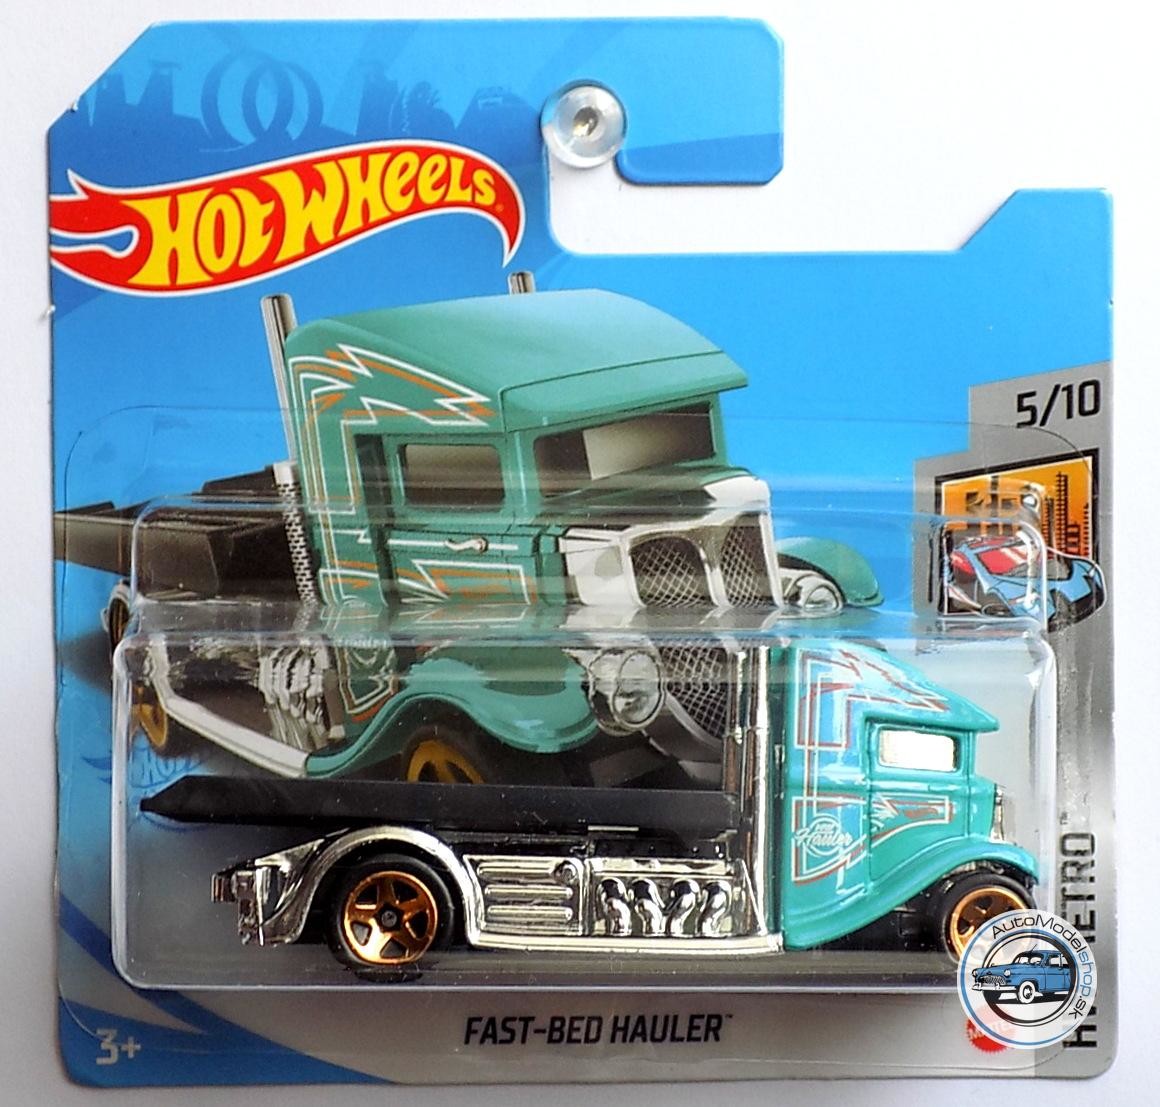 @ Hot Wheels Fast-Bed Hauler #83 HW Metro 5/10 Blue GRX83